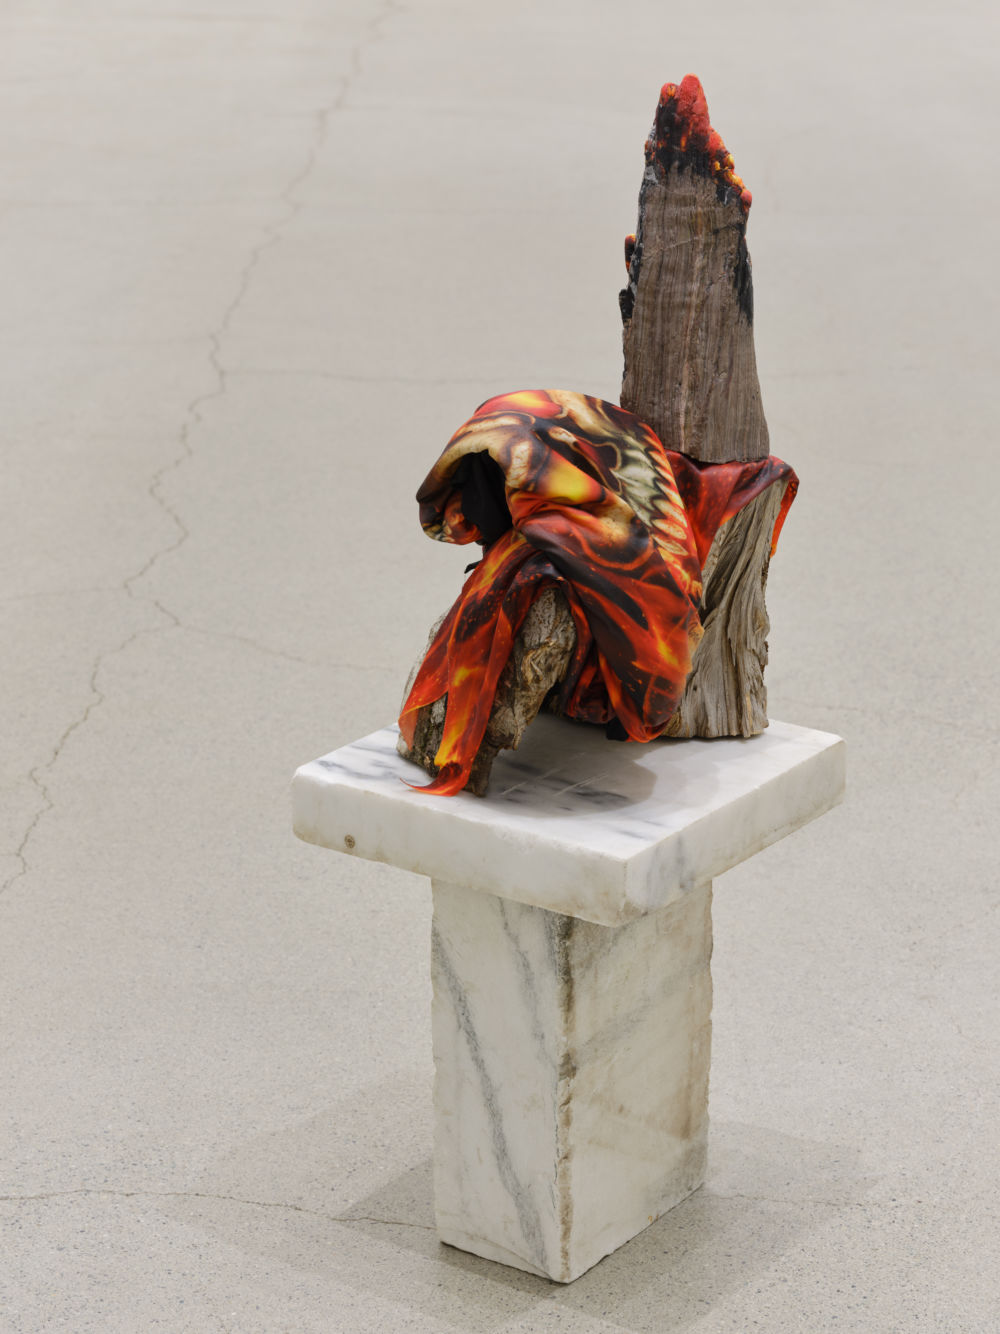 Valérie Blass, La chose même. La même chose., 2021, wood, polymer clay, dress, marble, 35 1/4 x 11 7/8 x 12 1/8 in. (90 x 30 x 31 cm) by 